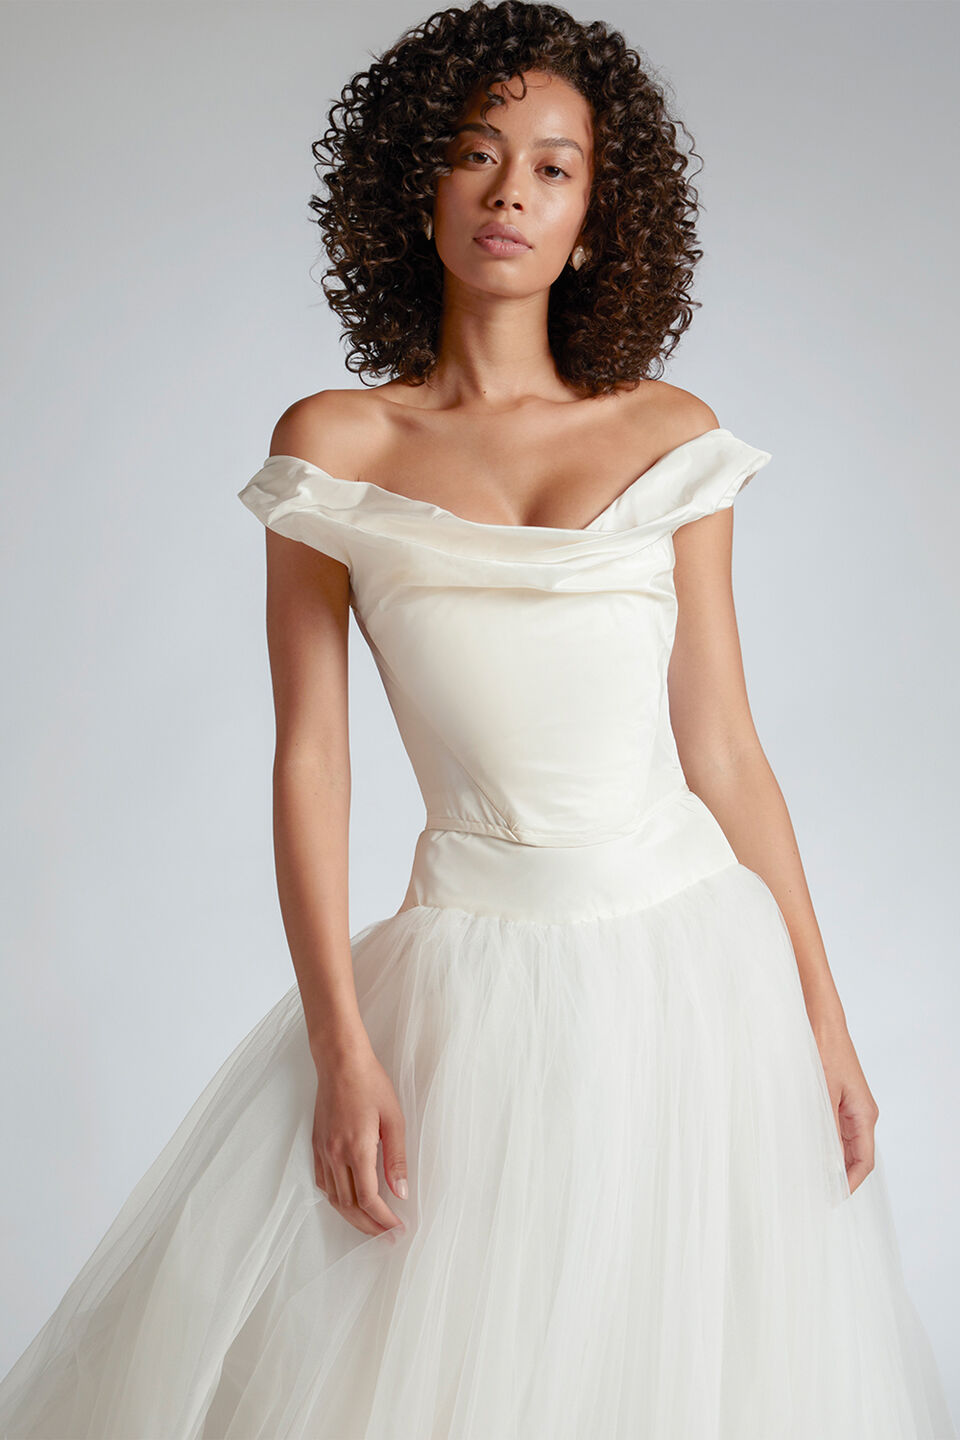 Bagatelle Corset & Vesta Petticoat Bridal Dress